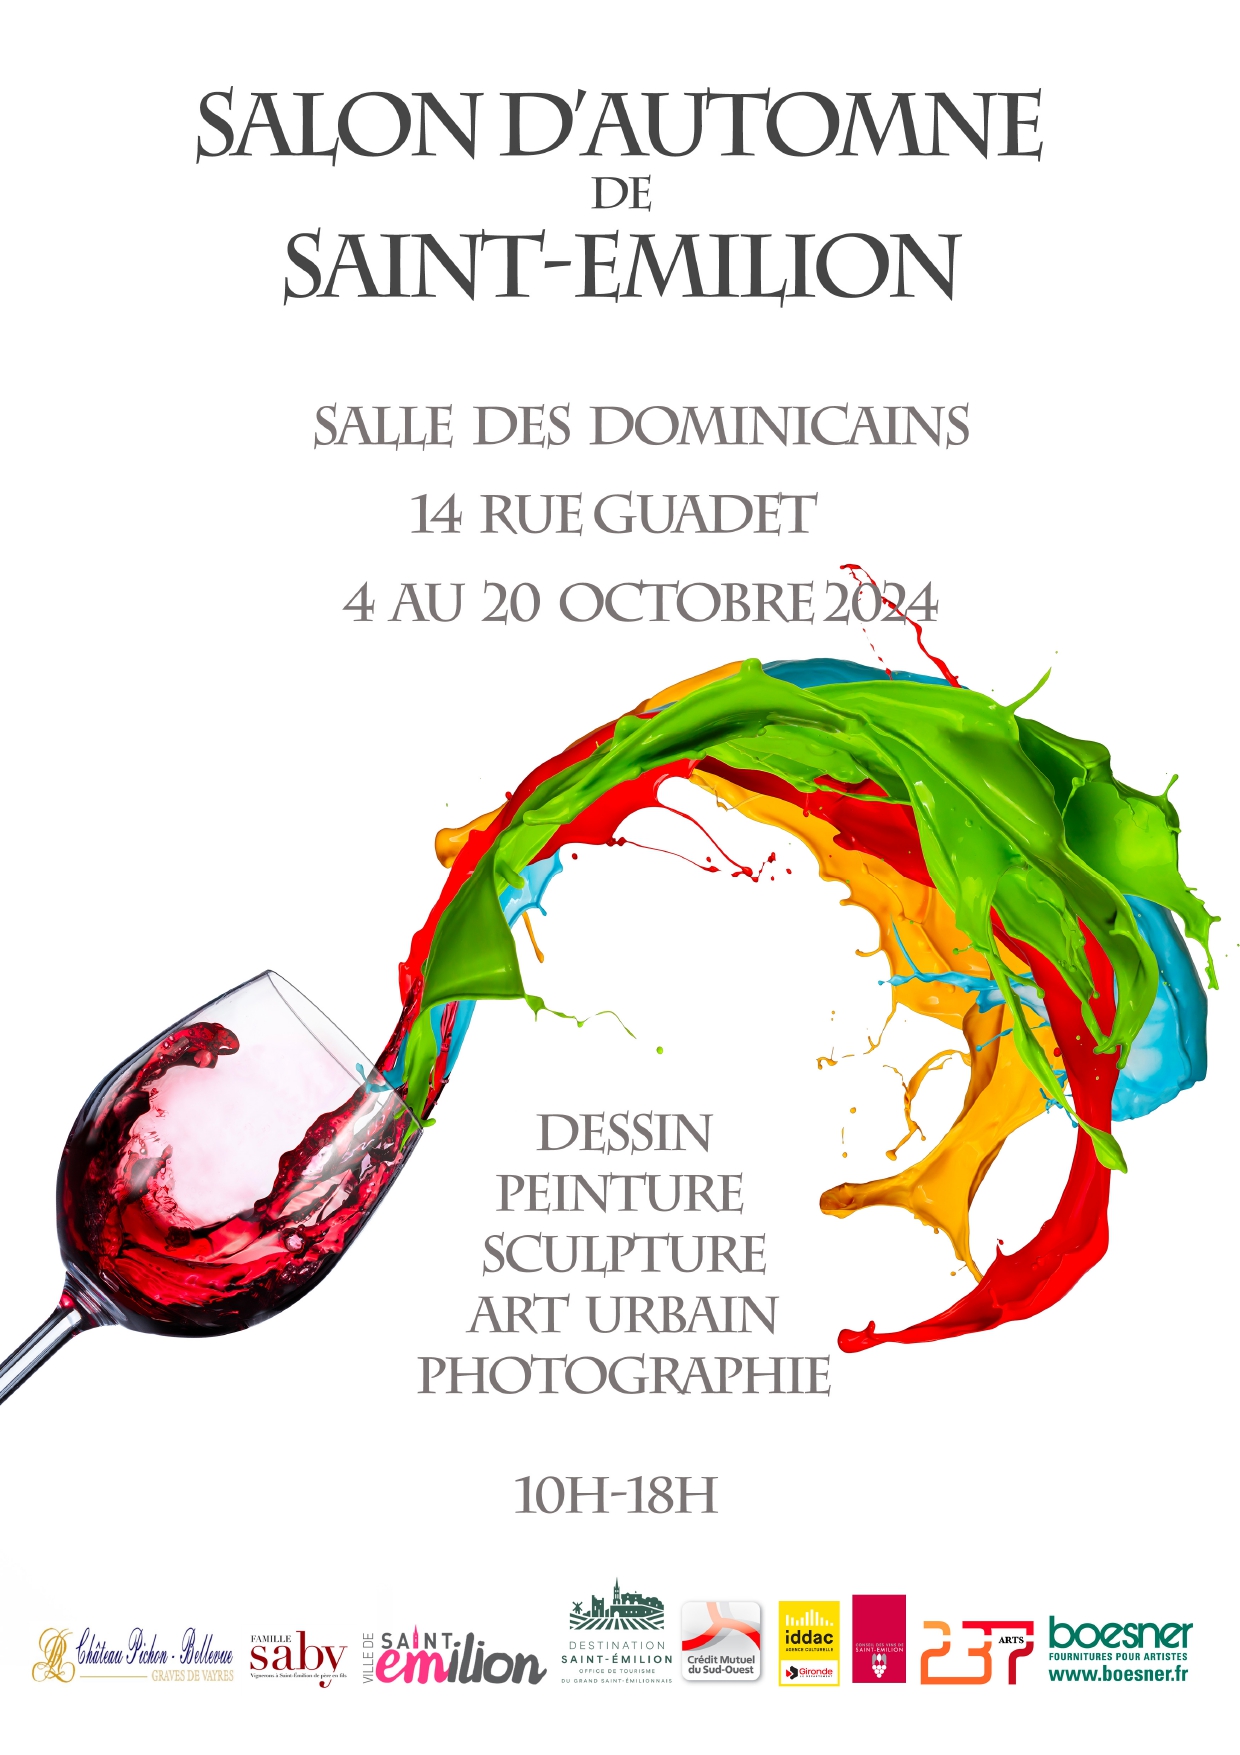 Salone d'autunno di Saint-Emilion